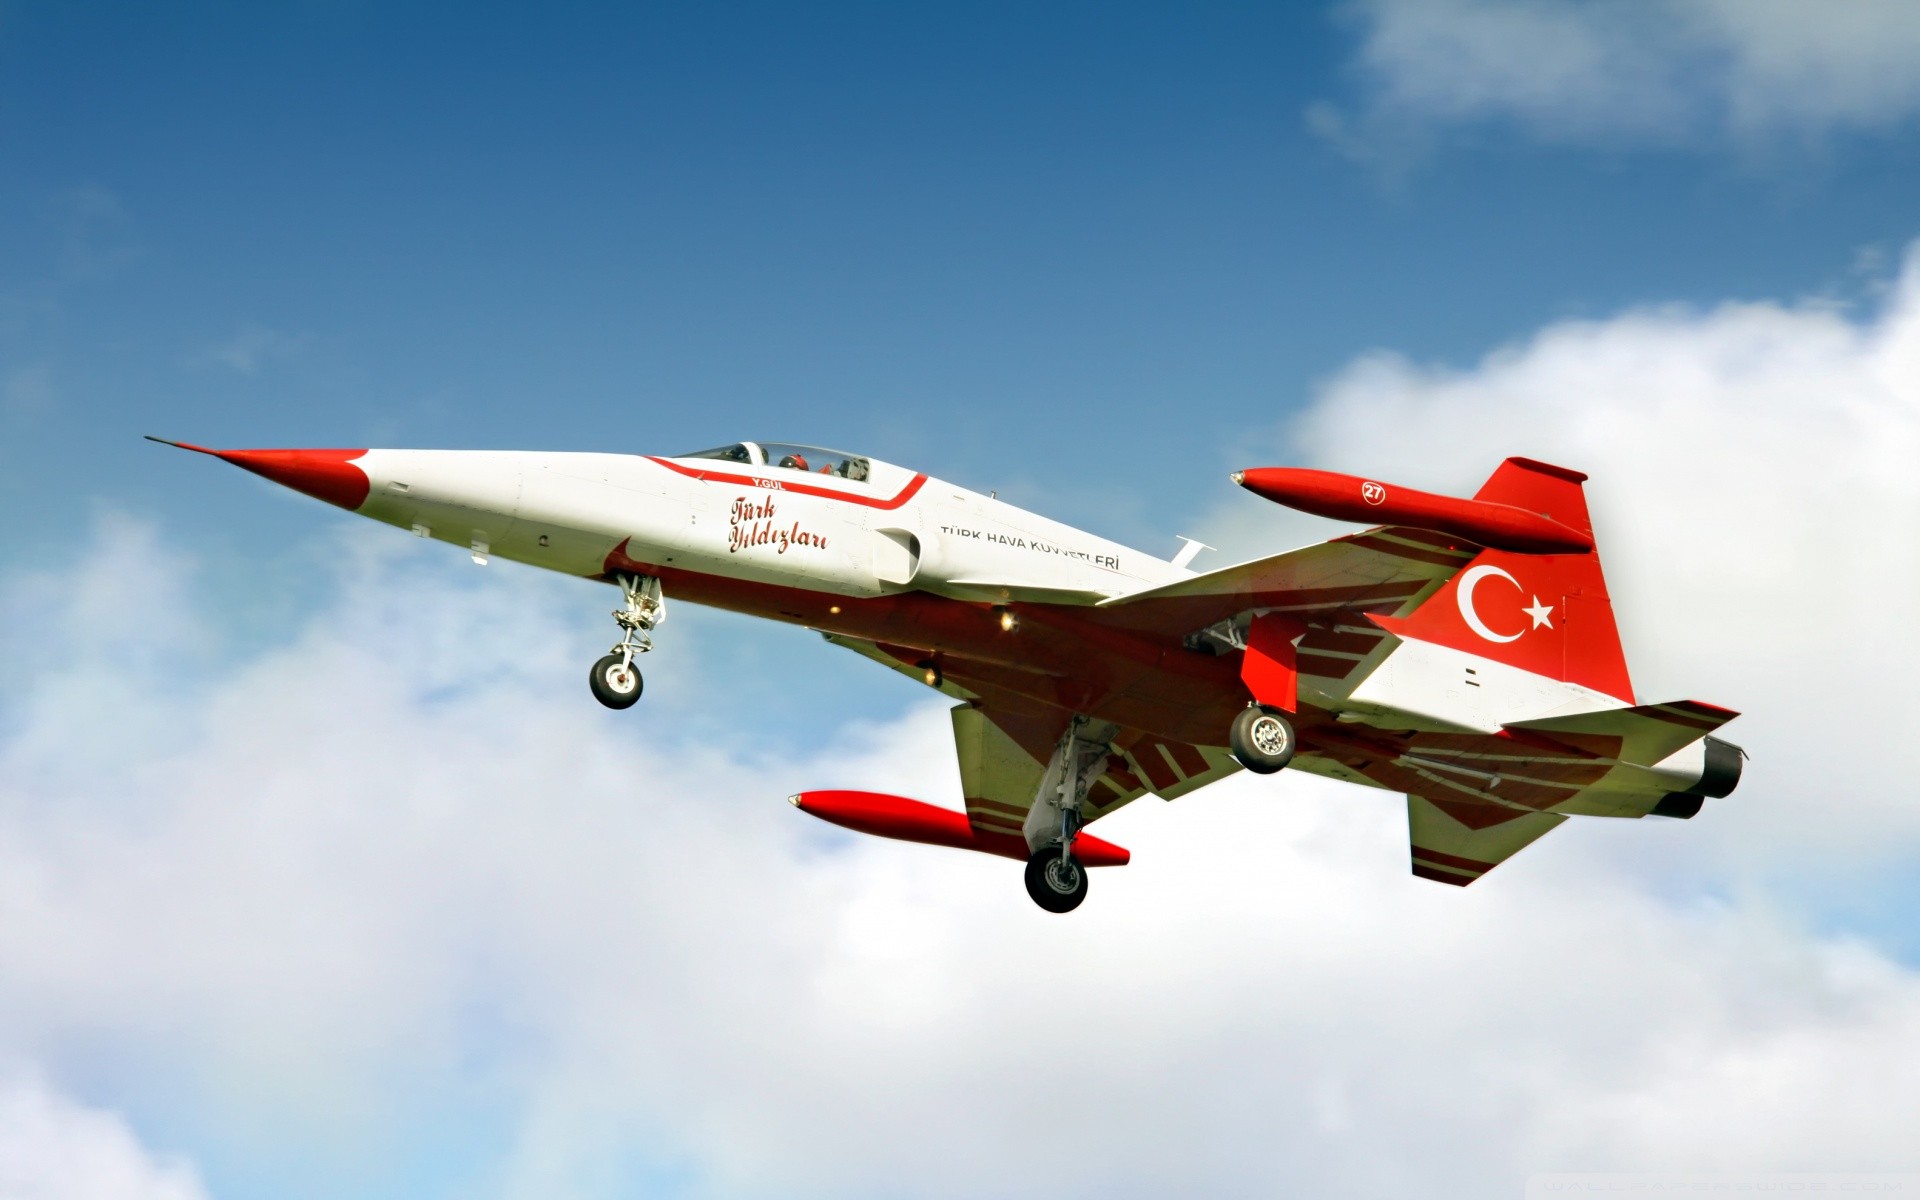 General 1920x1200 airplane Turkey aircraft military aircraft military vehicle military vehicle TUAF Turkish Stars